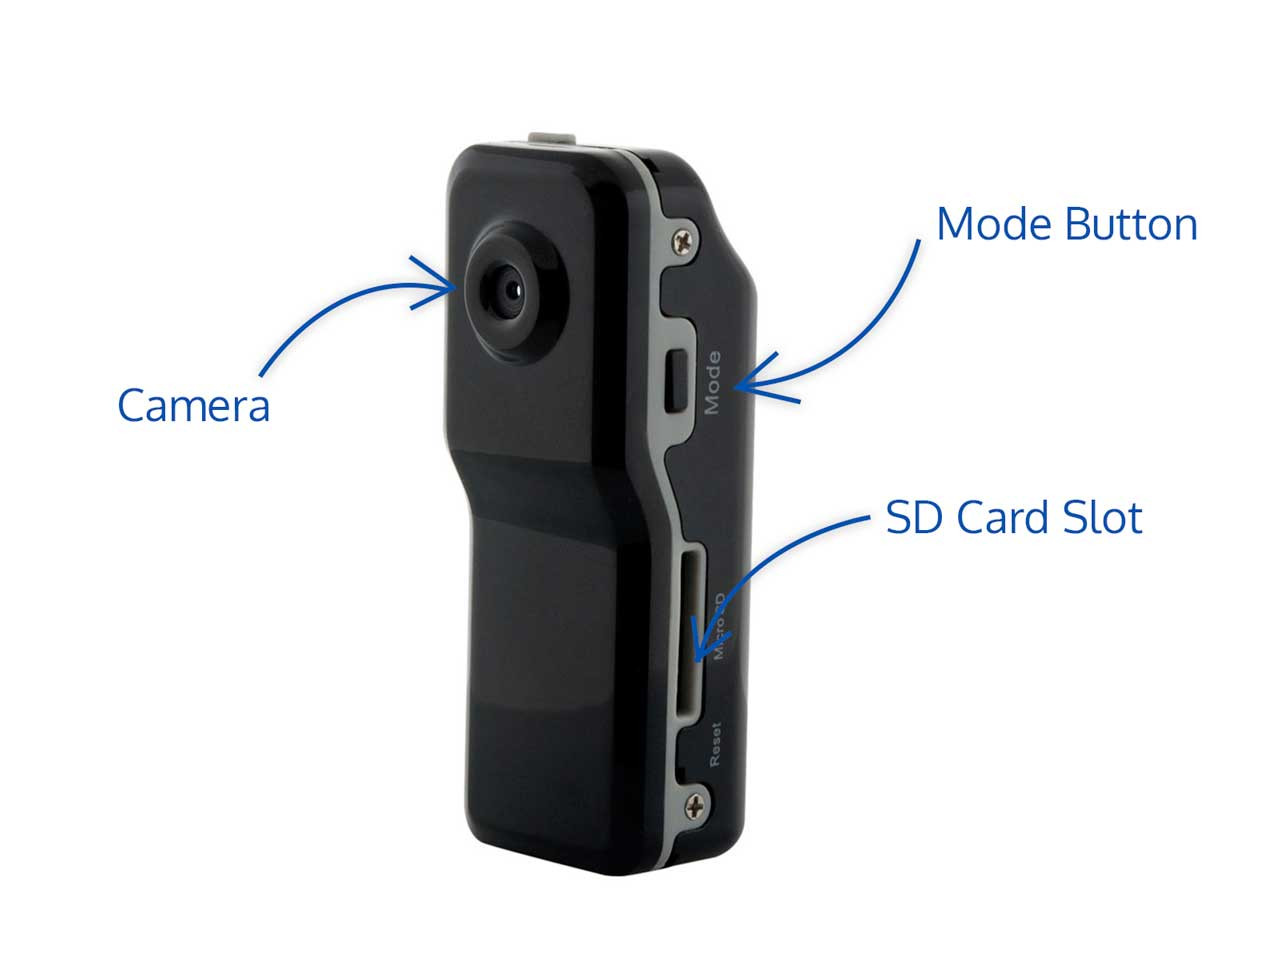 mini spy camera low price